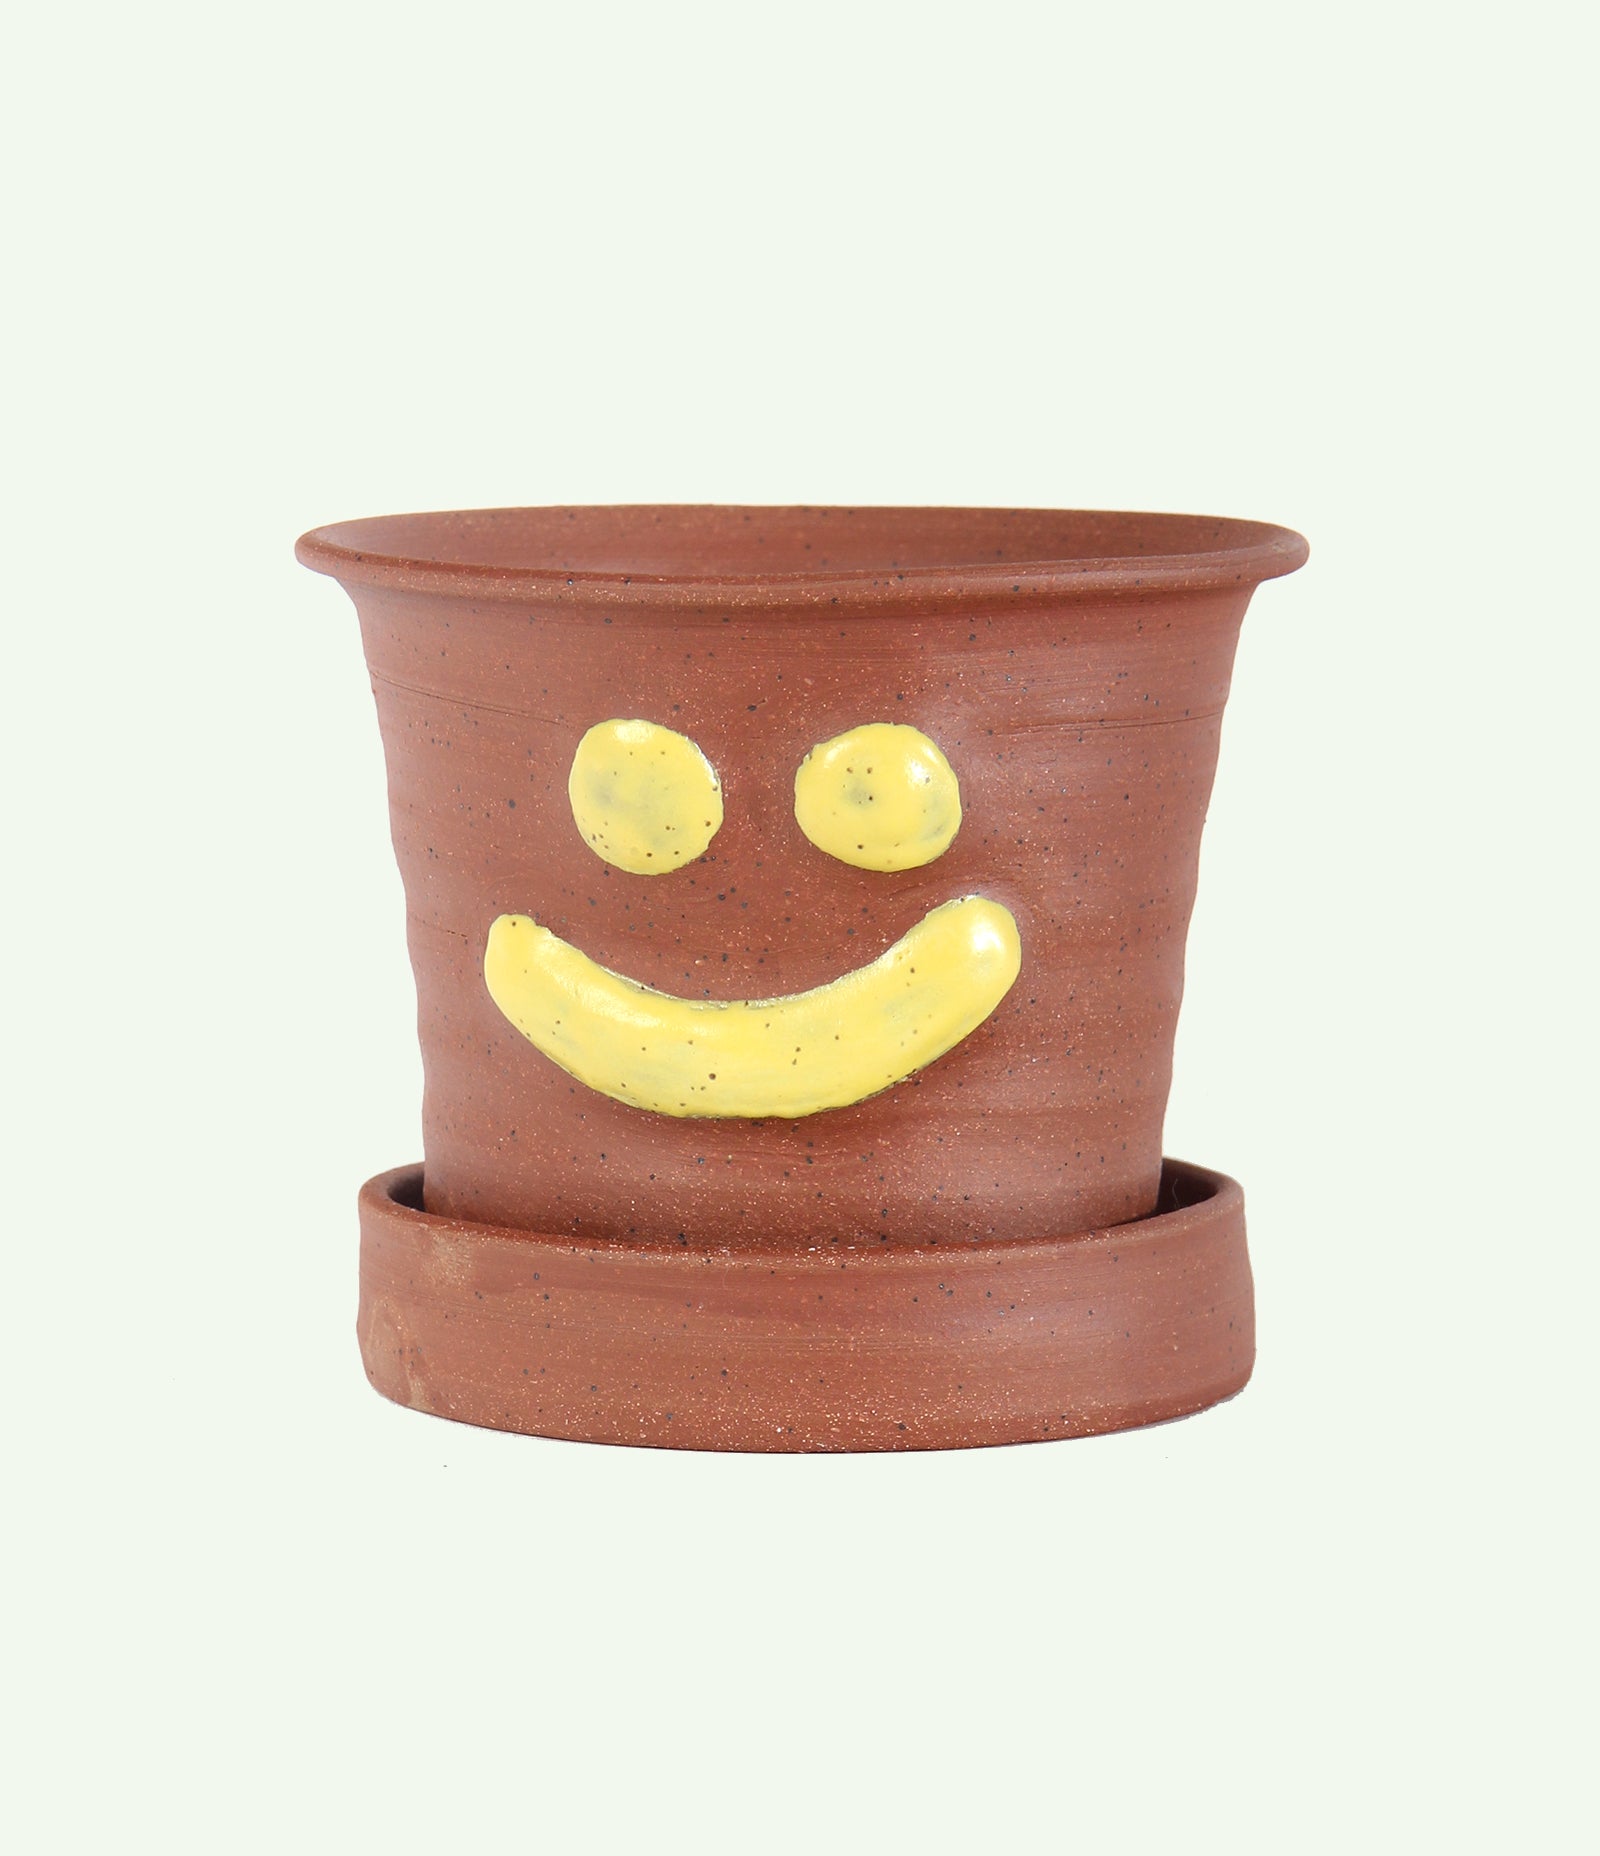 The Smiley Plant Pot